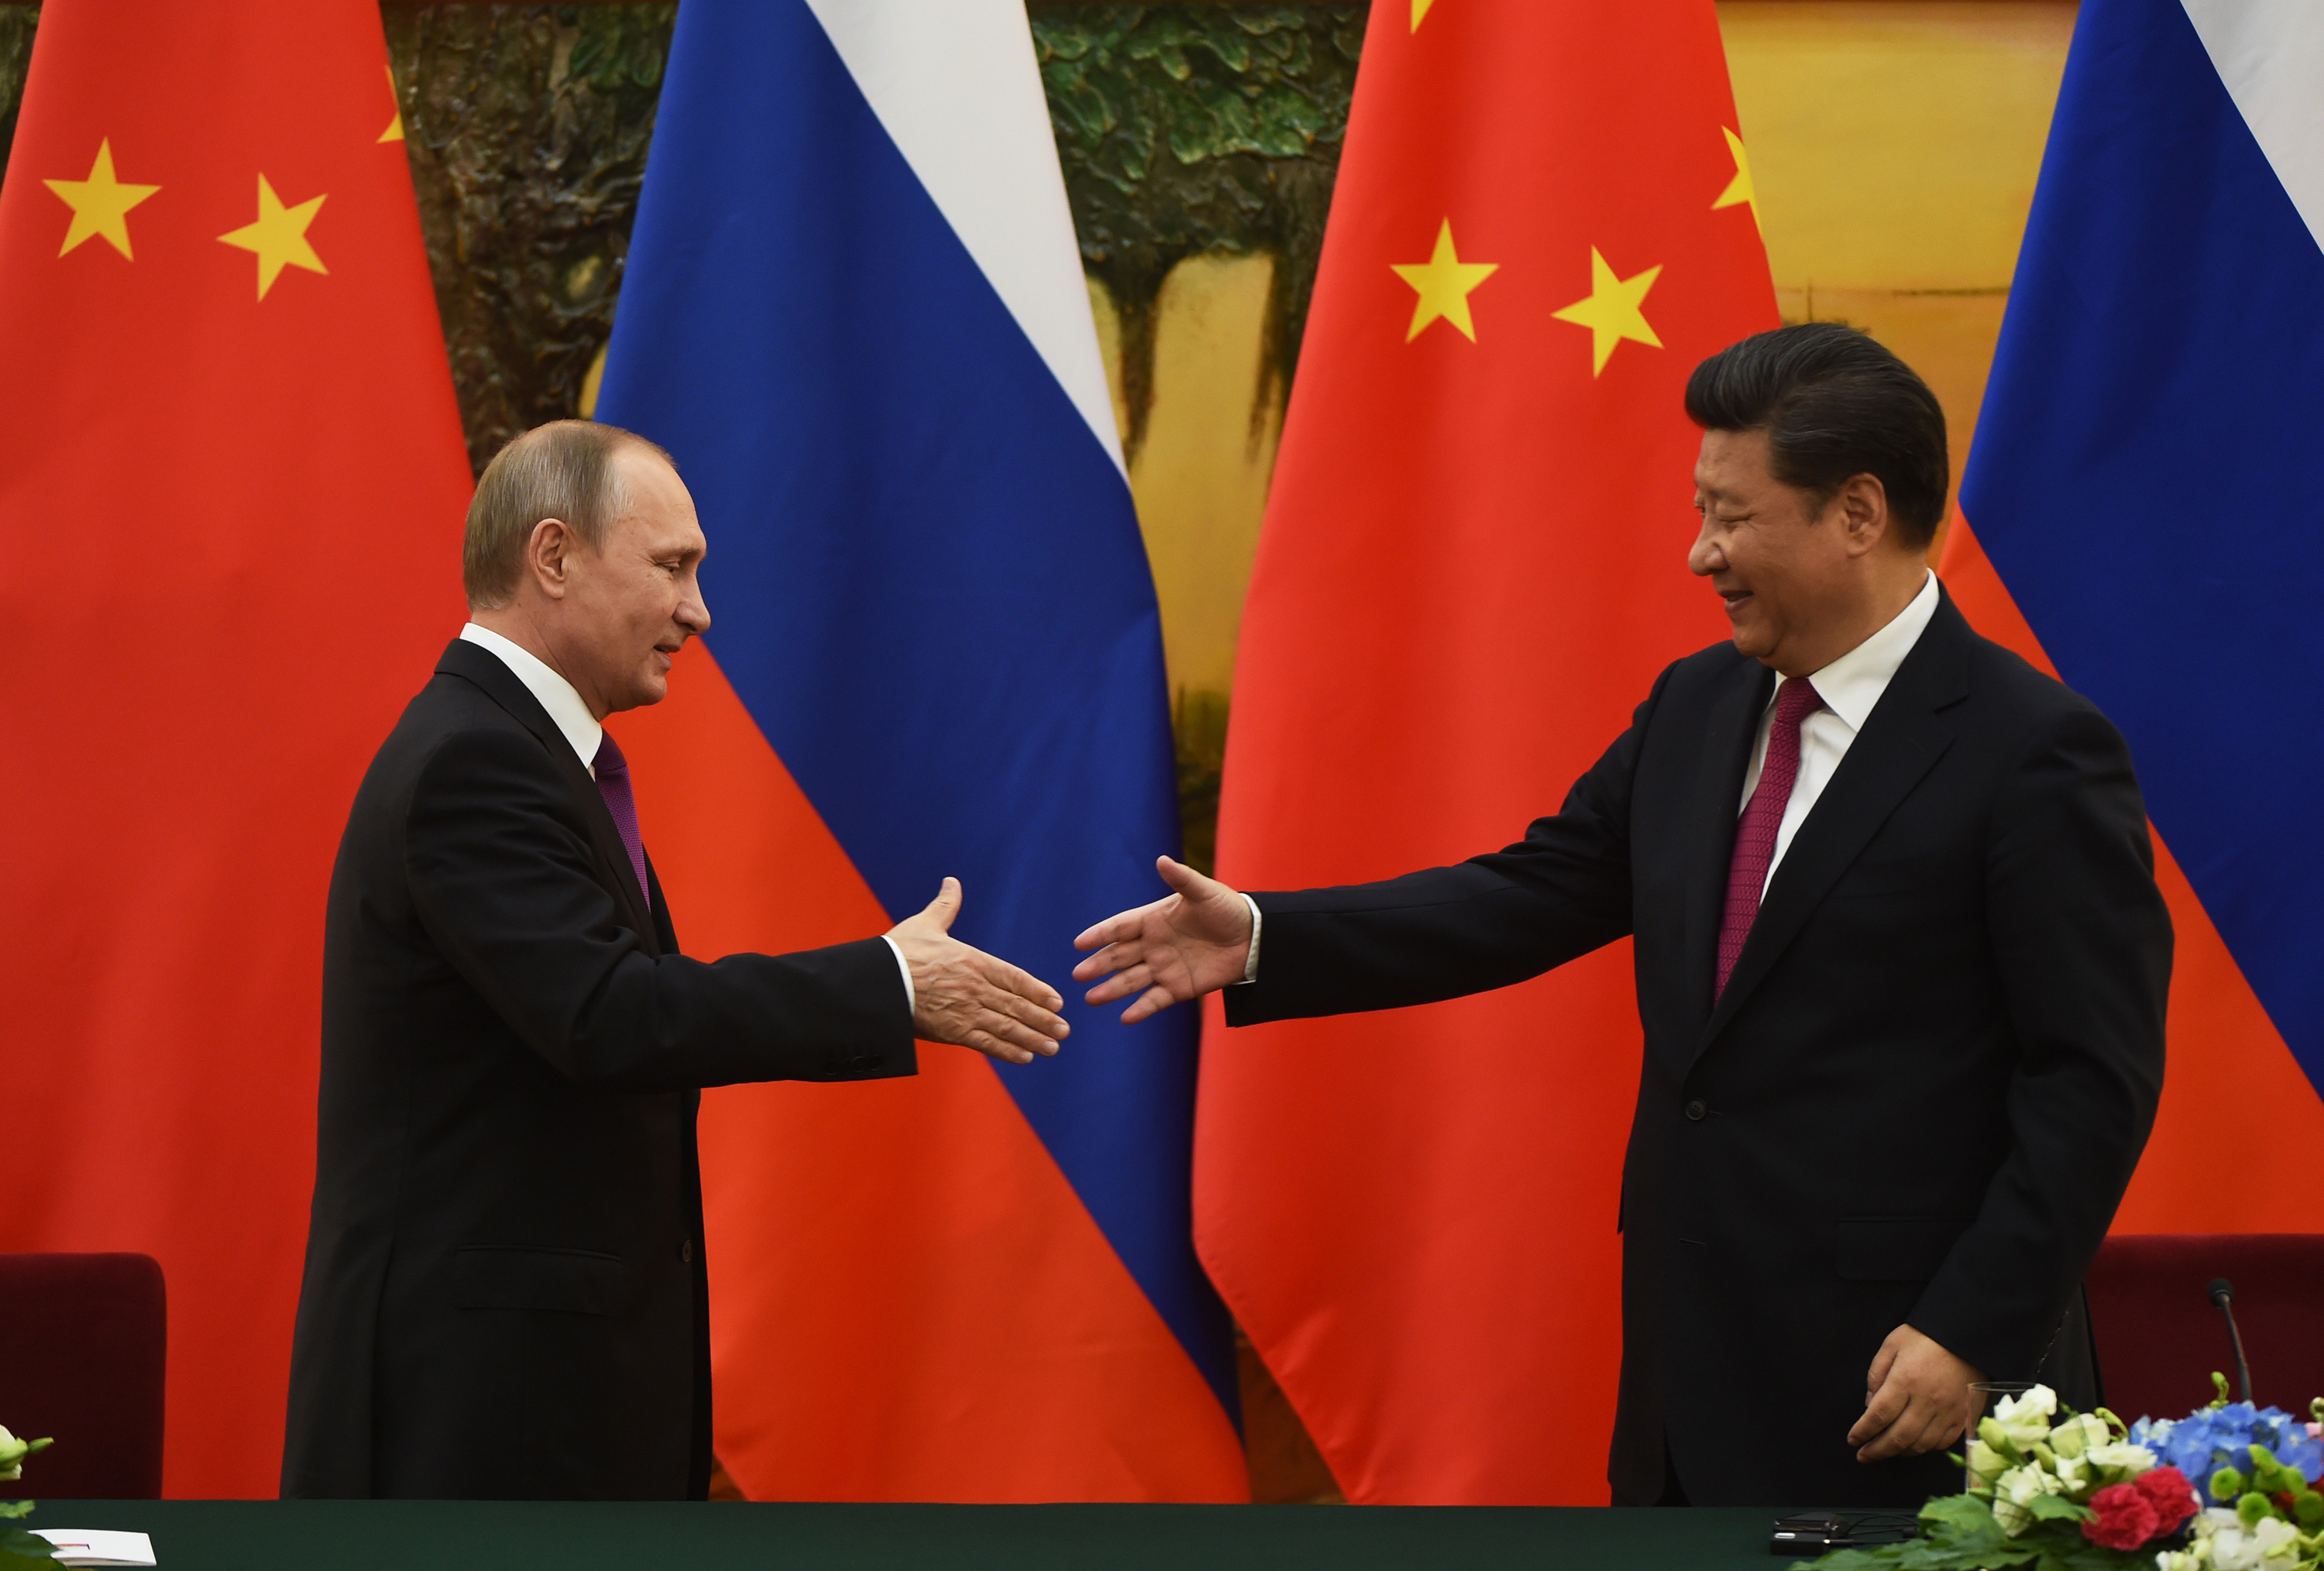 Der russische Präsident Wladimir Putin, links, schüttelt dem chinesischen Präsidenten Xi Jinping die Hand